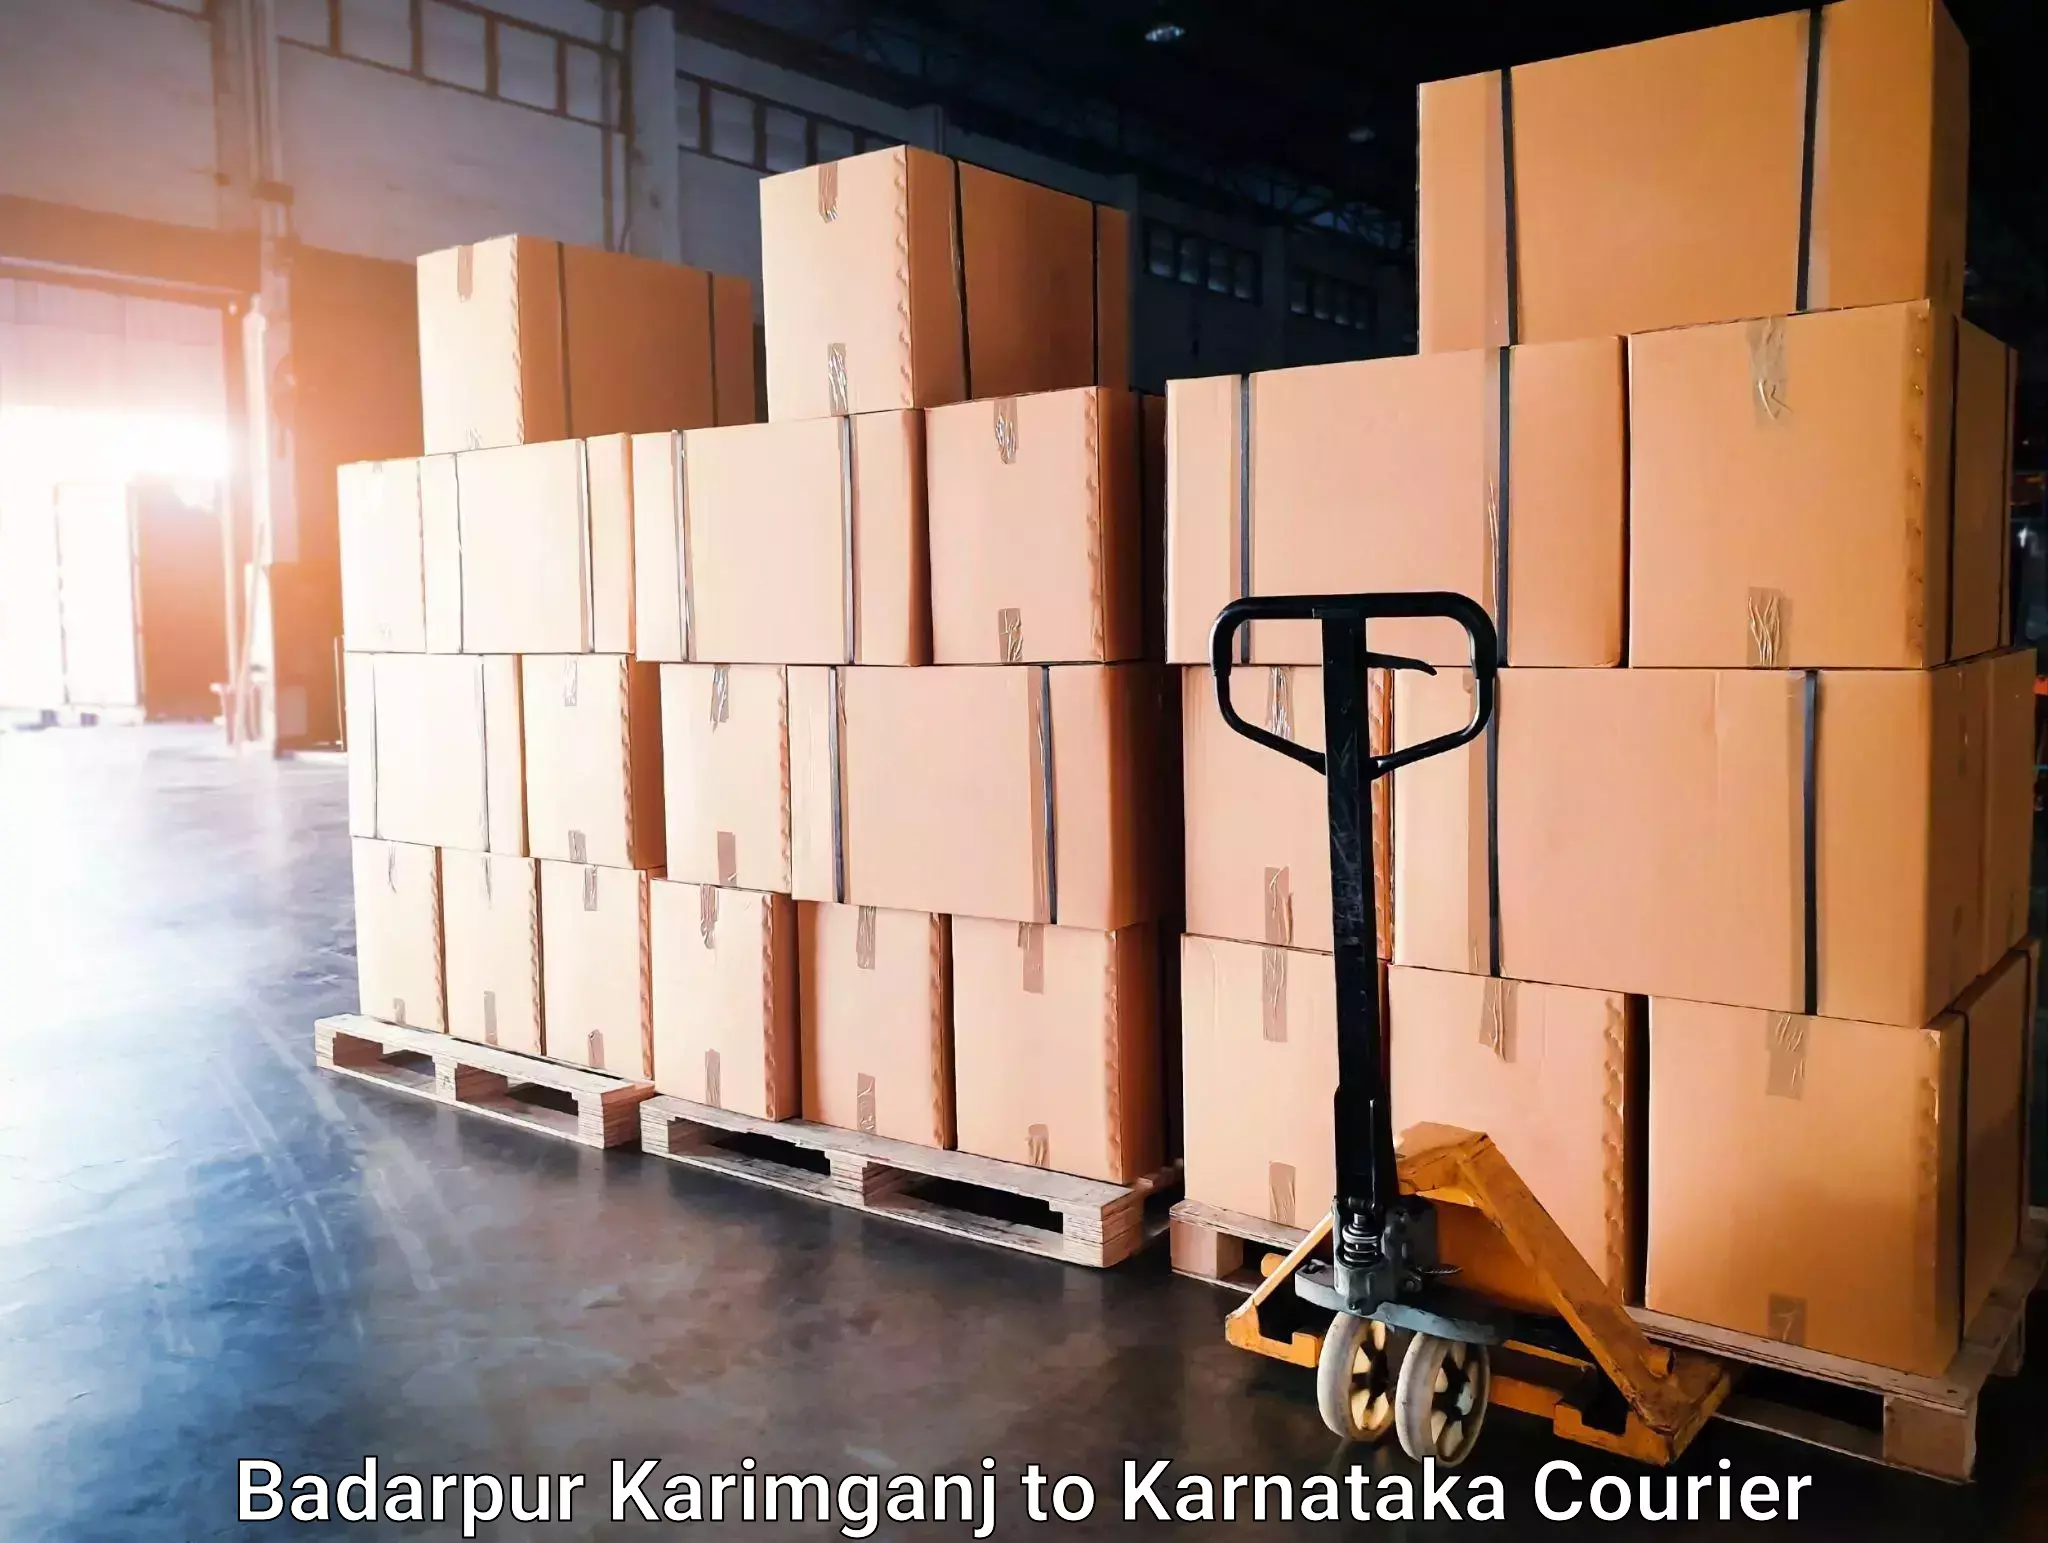 Express delivery capabilities Badarpur Karimganj to Bangalore